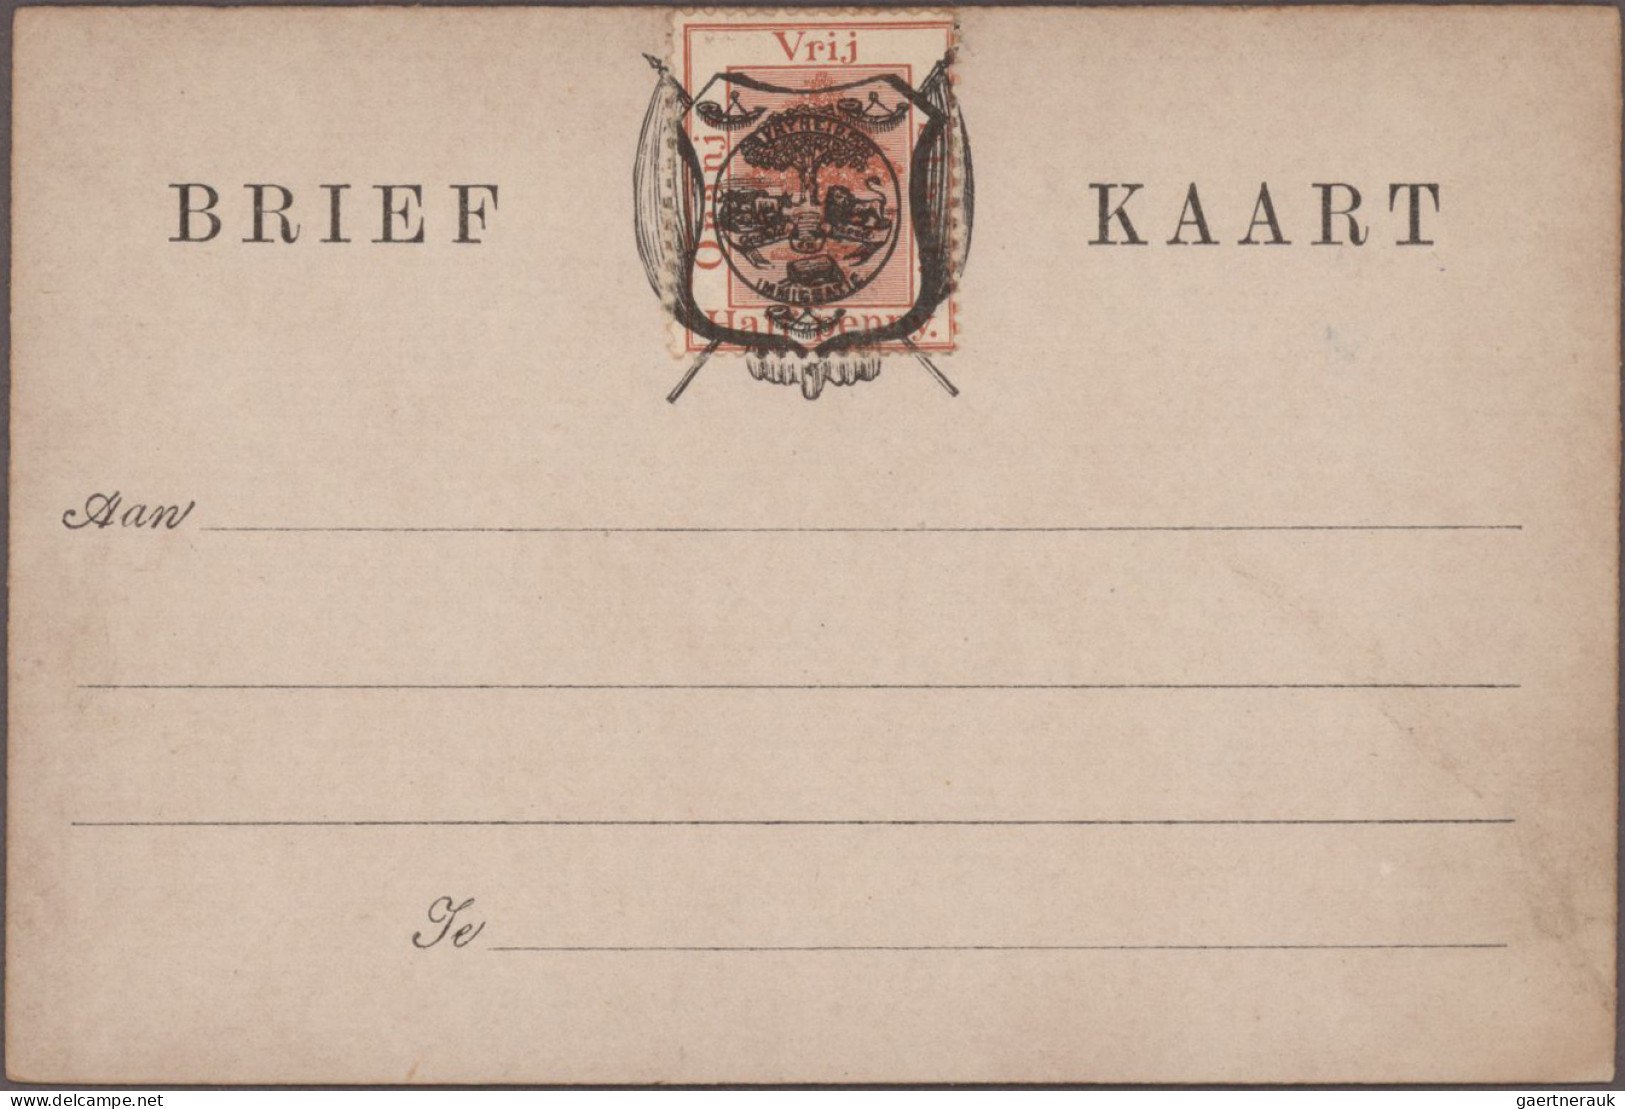 Oranje free state - postal stationery: 1884/1898, comprehensive balance of more